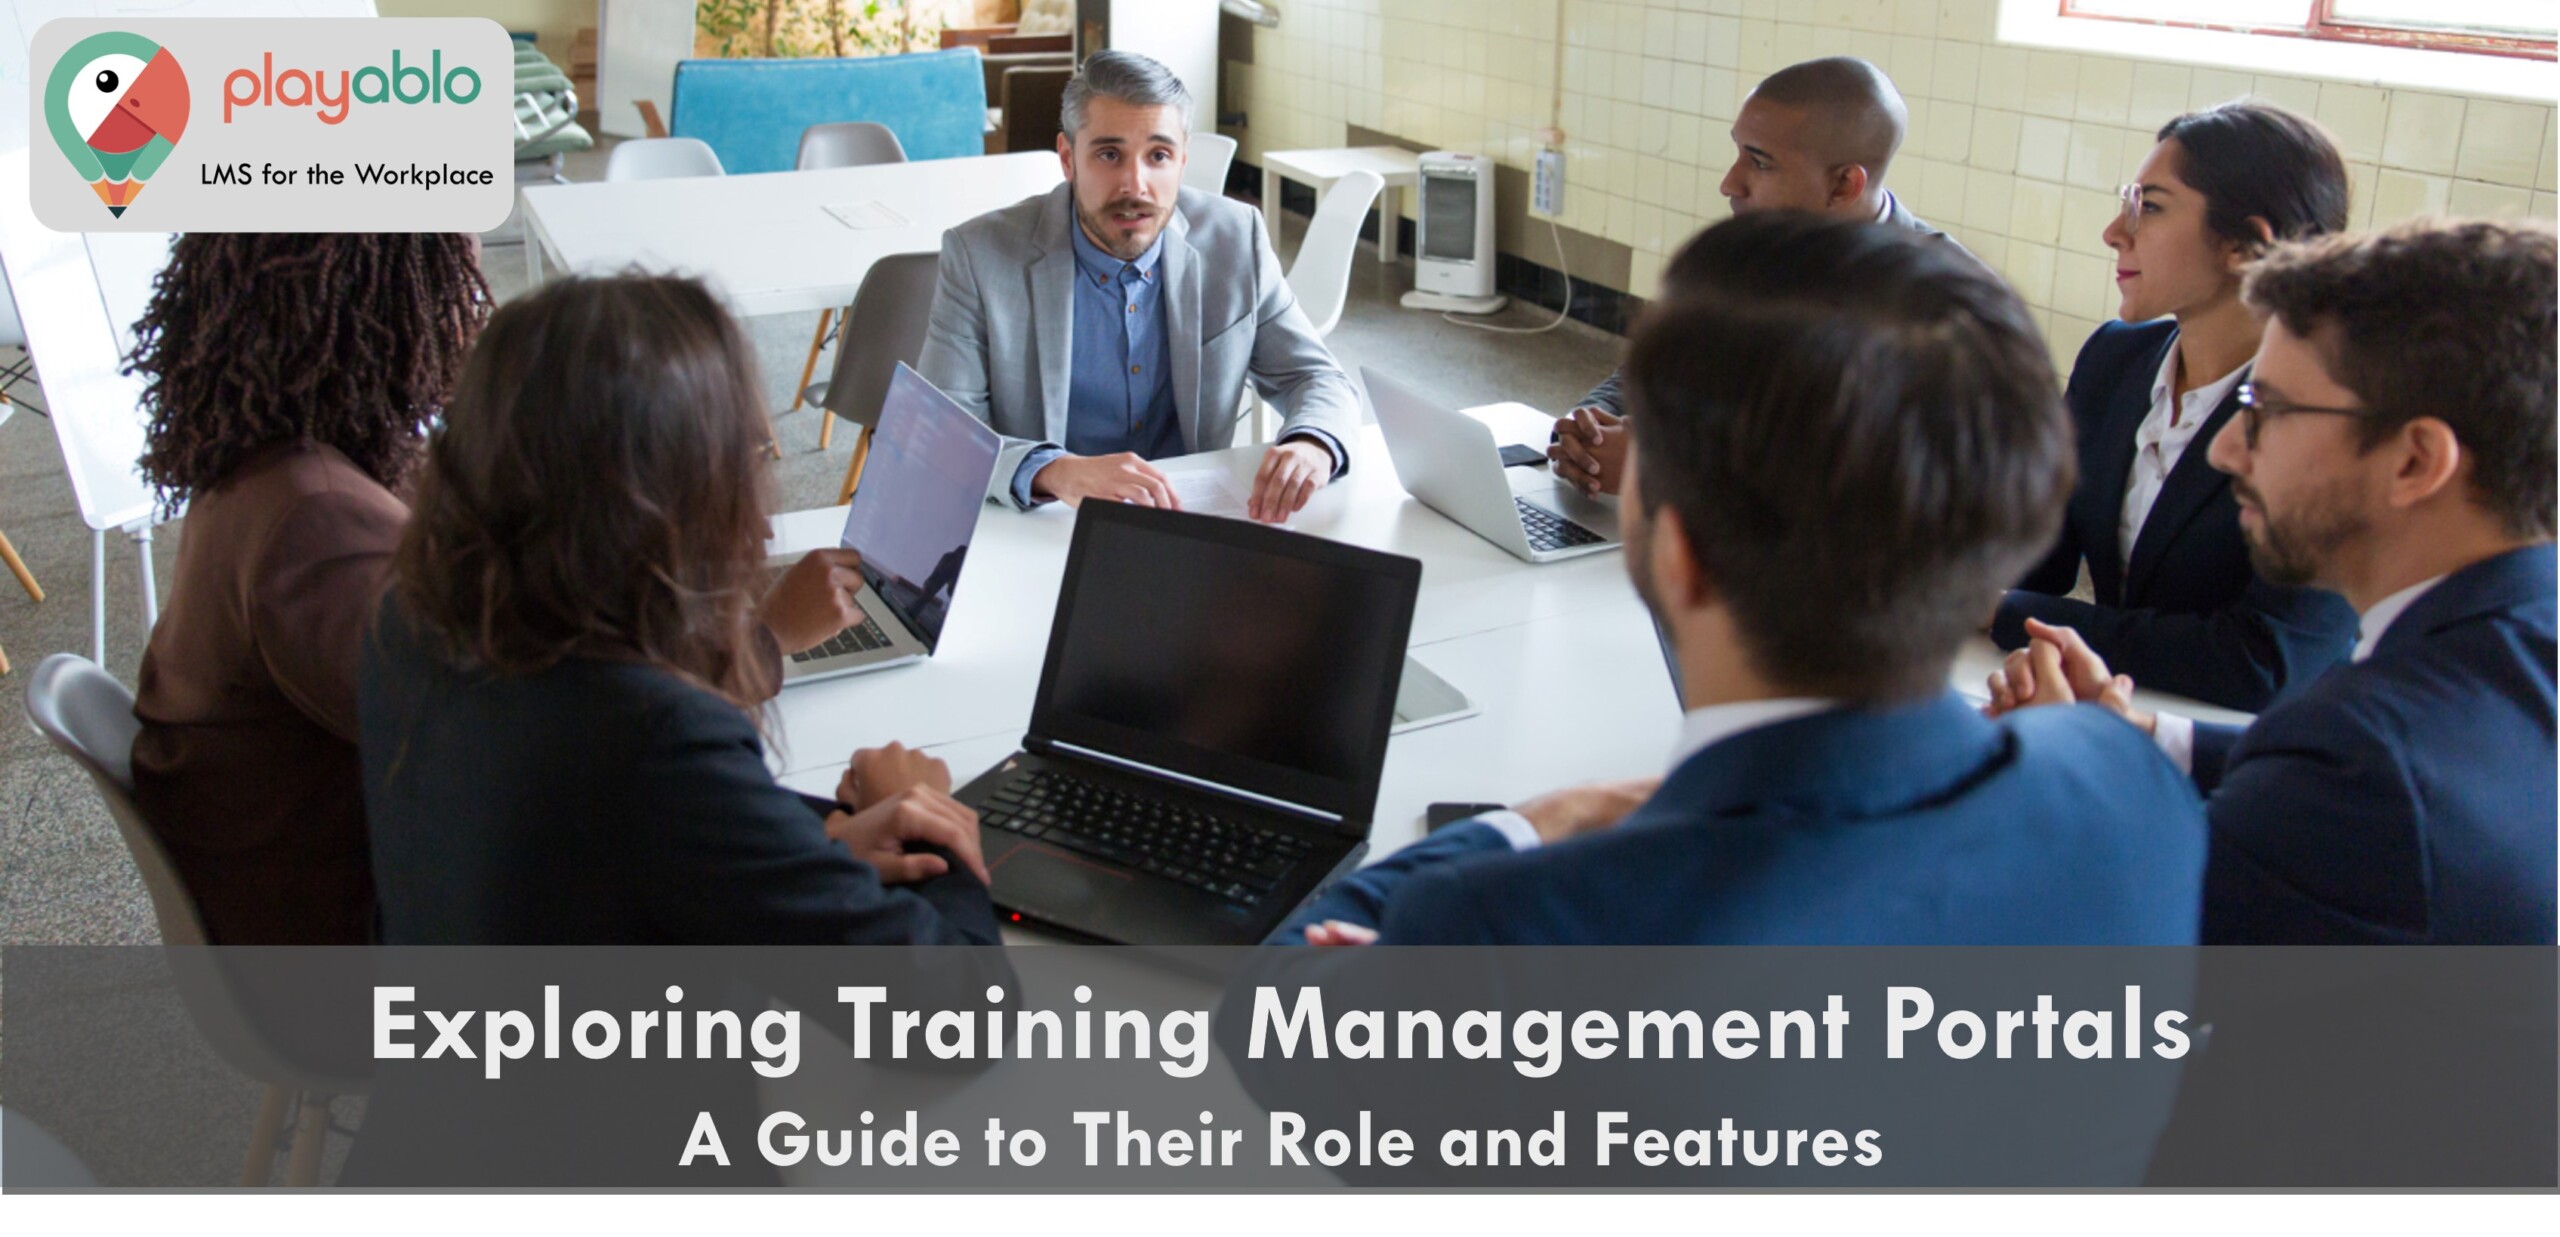 Training Management Portals